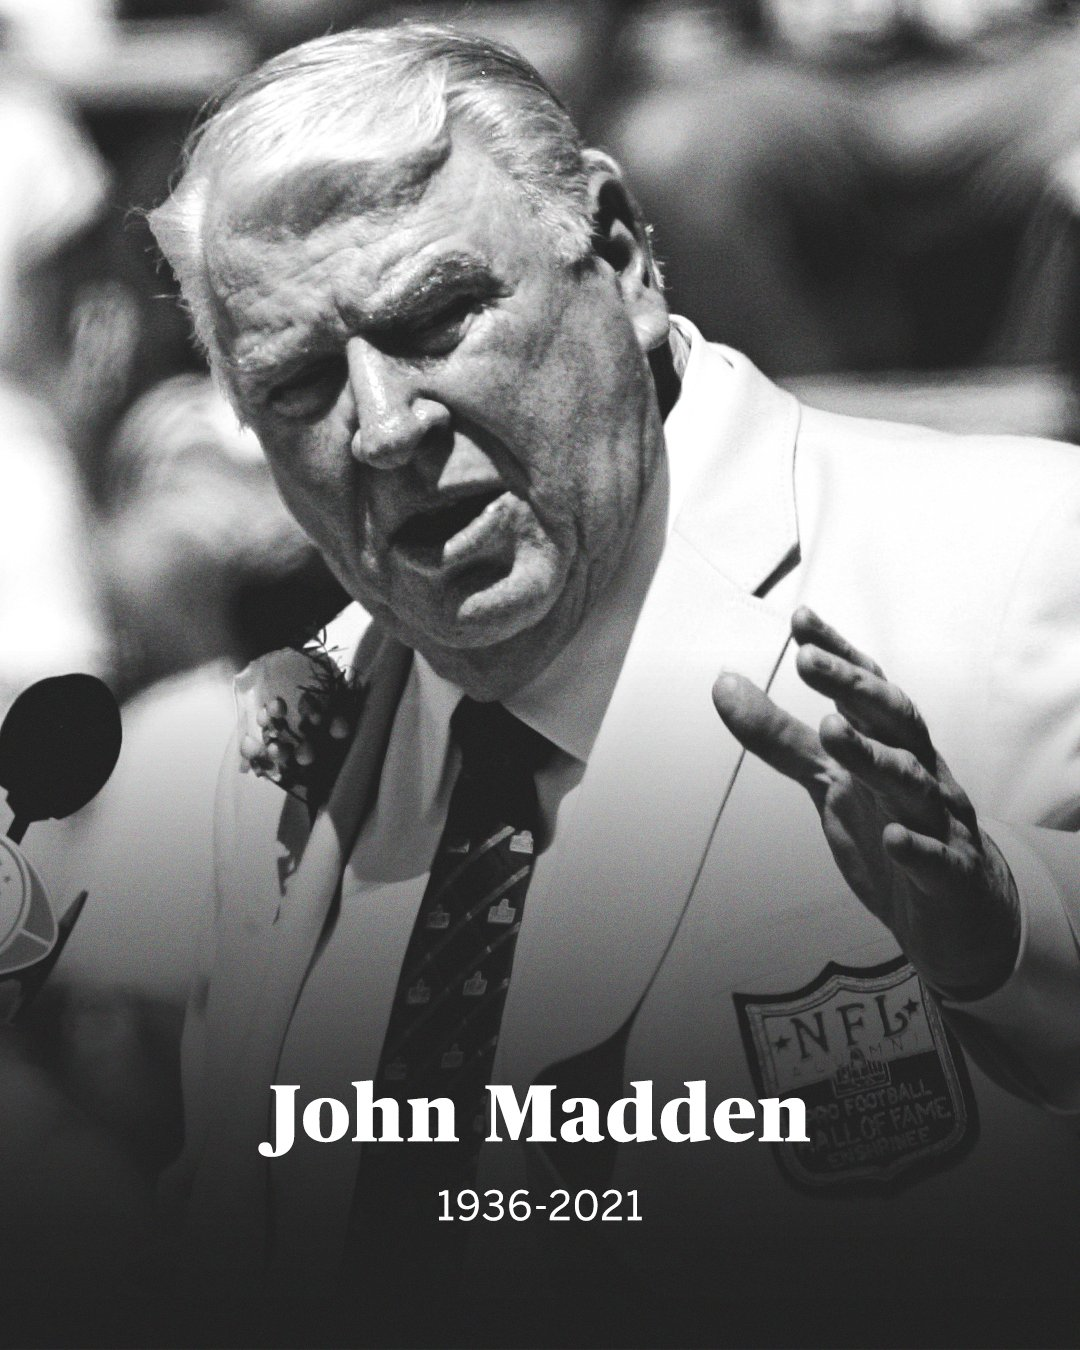 John Madden has died aged 85 